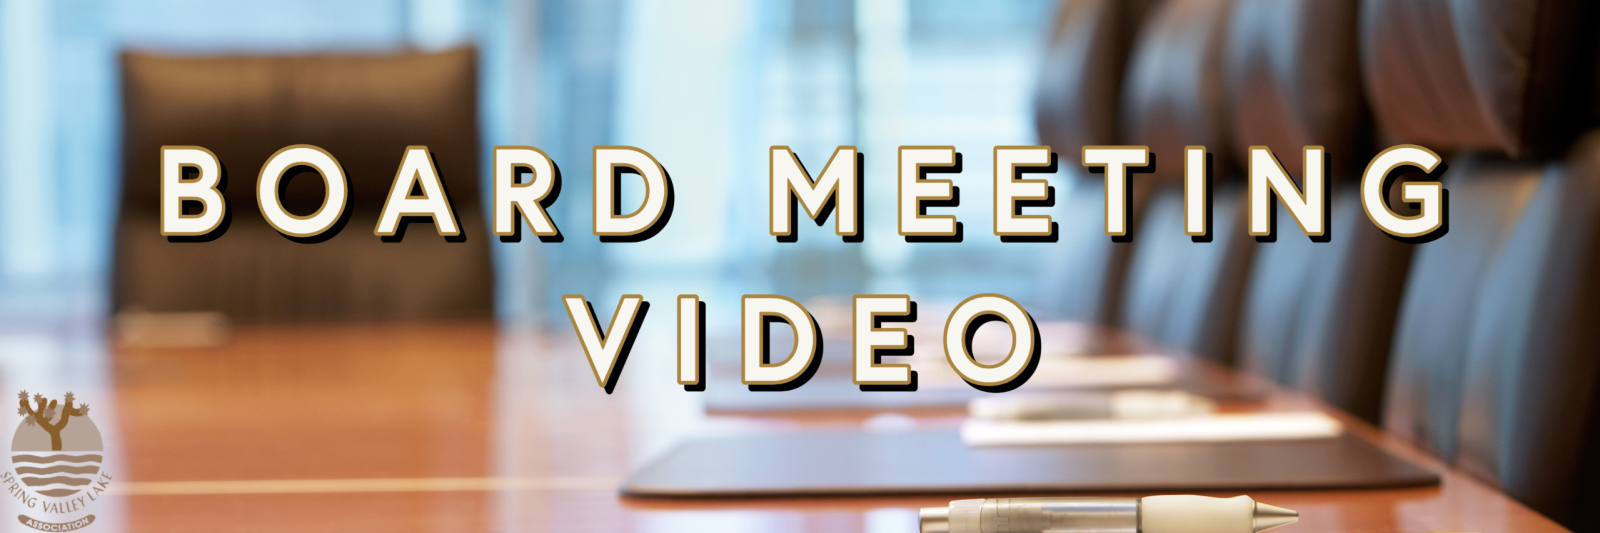 Board Meeting Video Banner